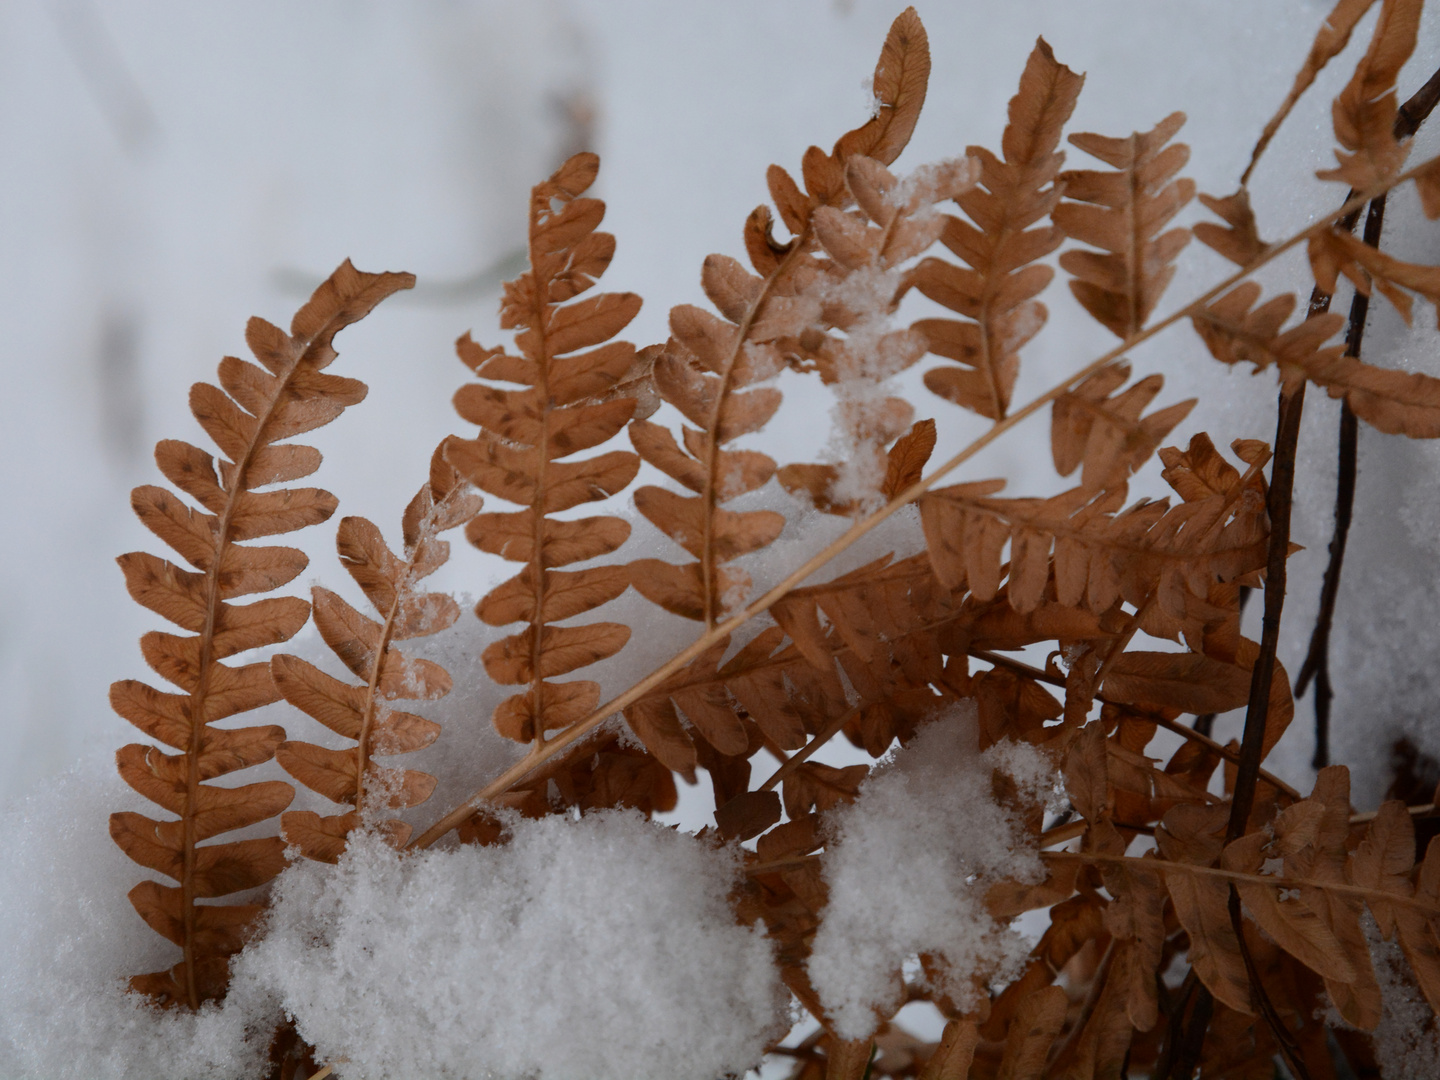 The fern on winter